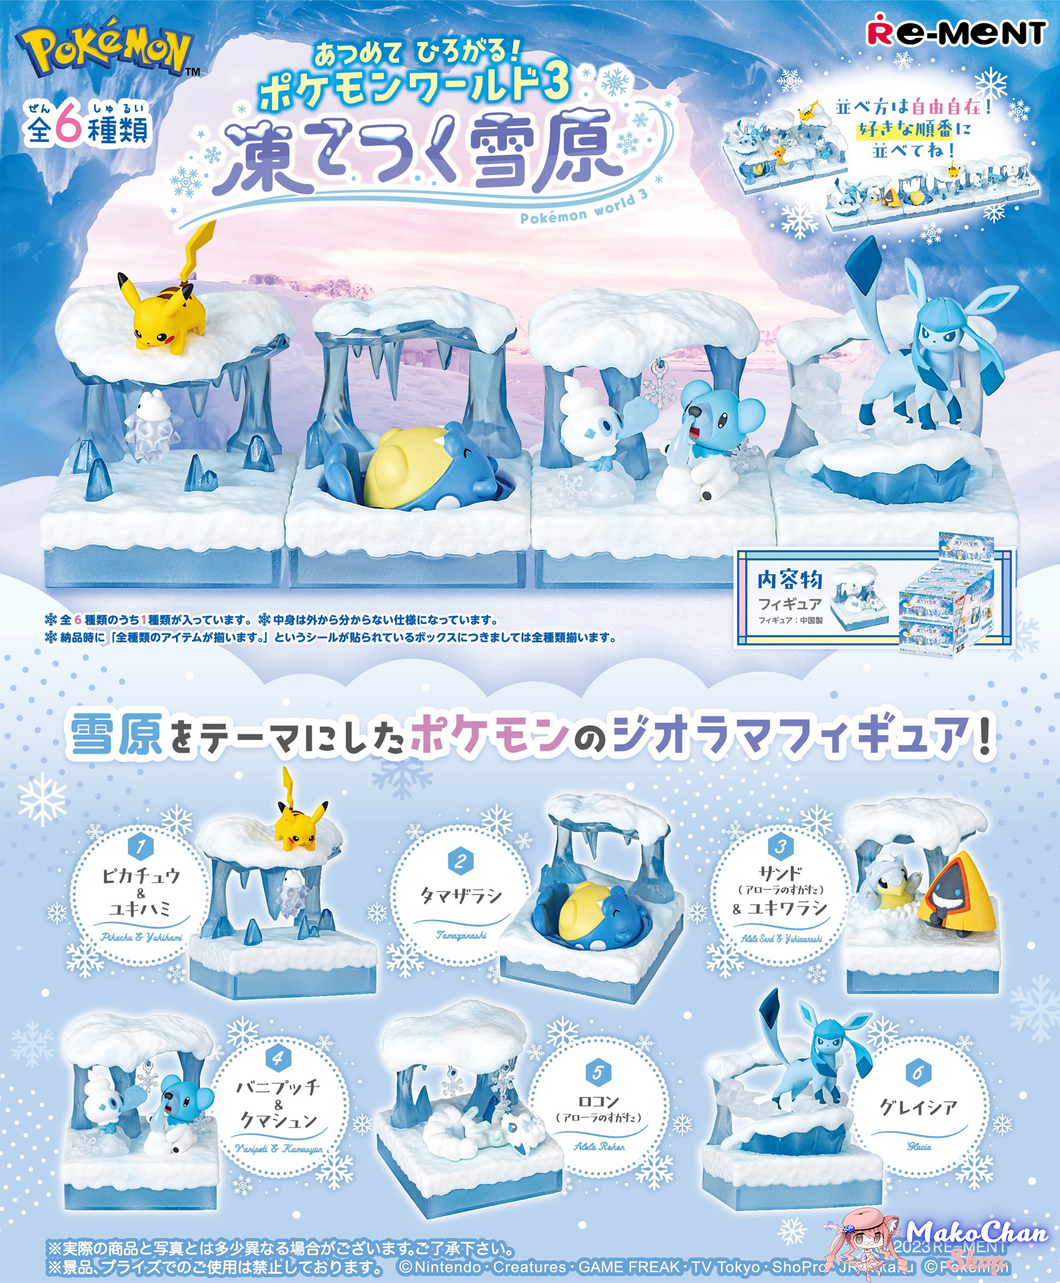 Re-ment Pokemon Gather and Expand! Pokemon World 3: Freezing Snowfield